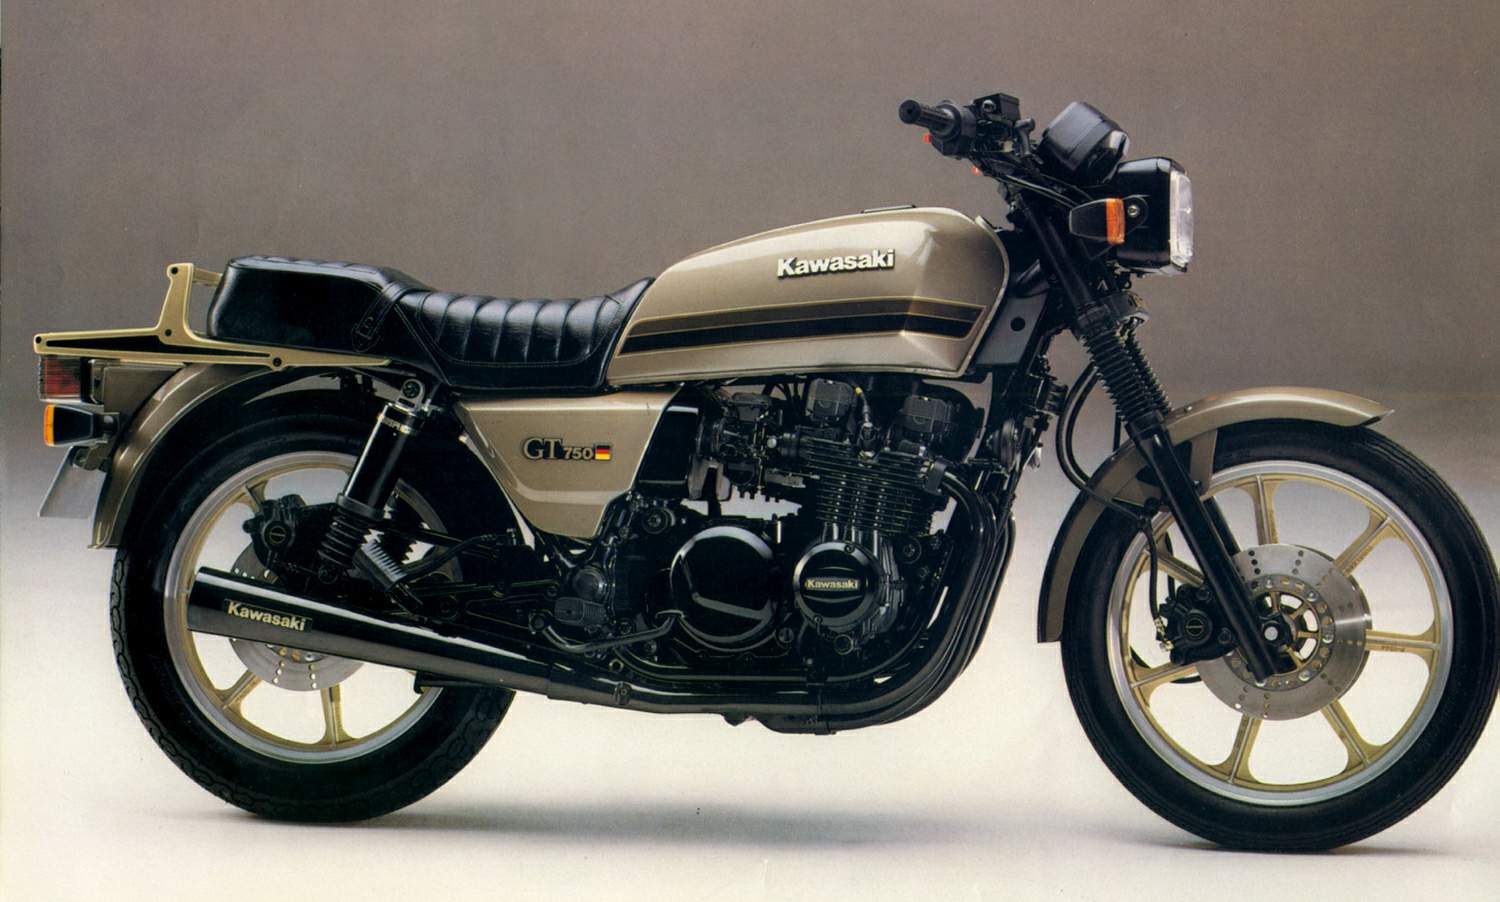 Kawasaki 750 technical specifications